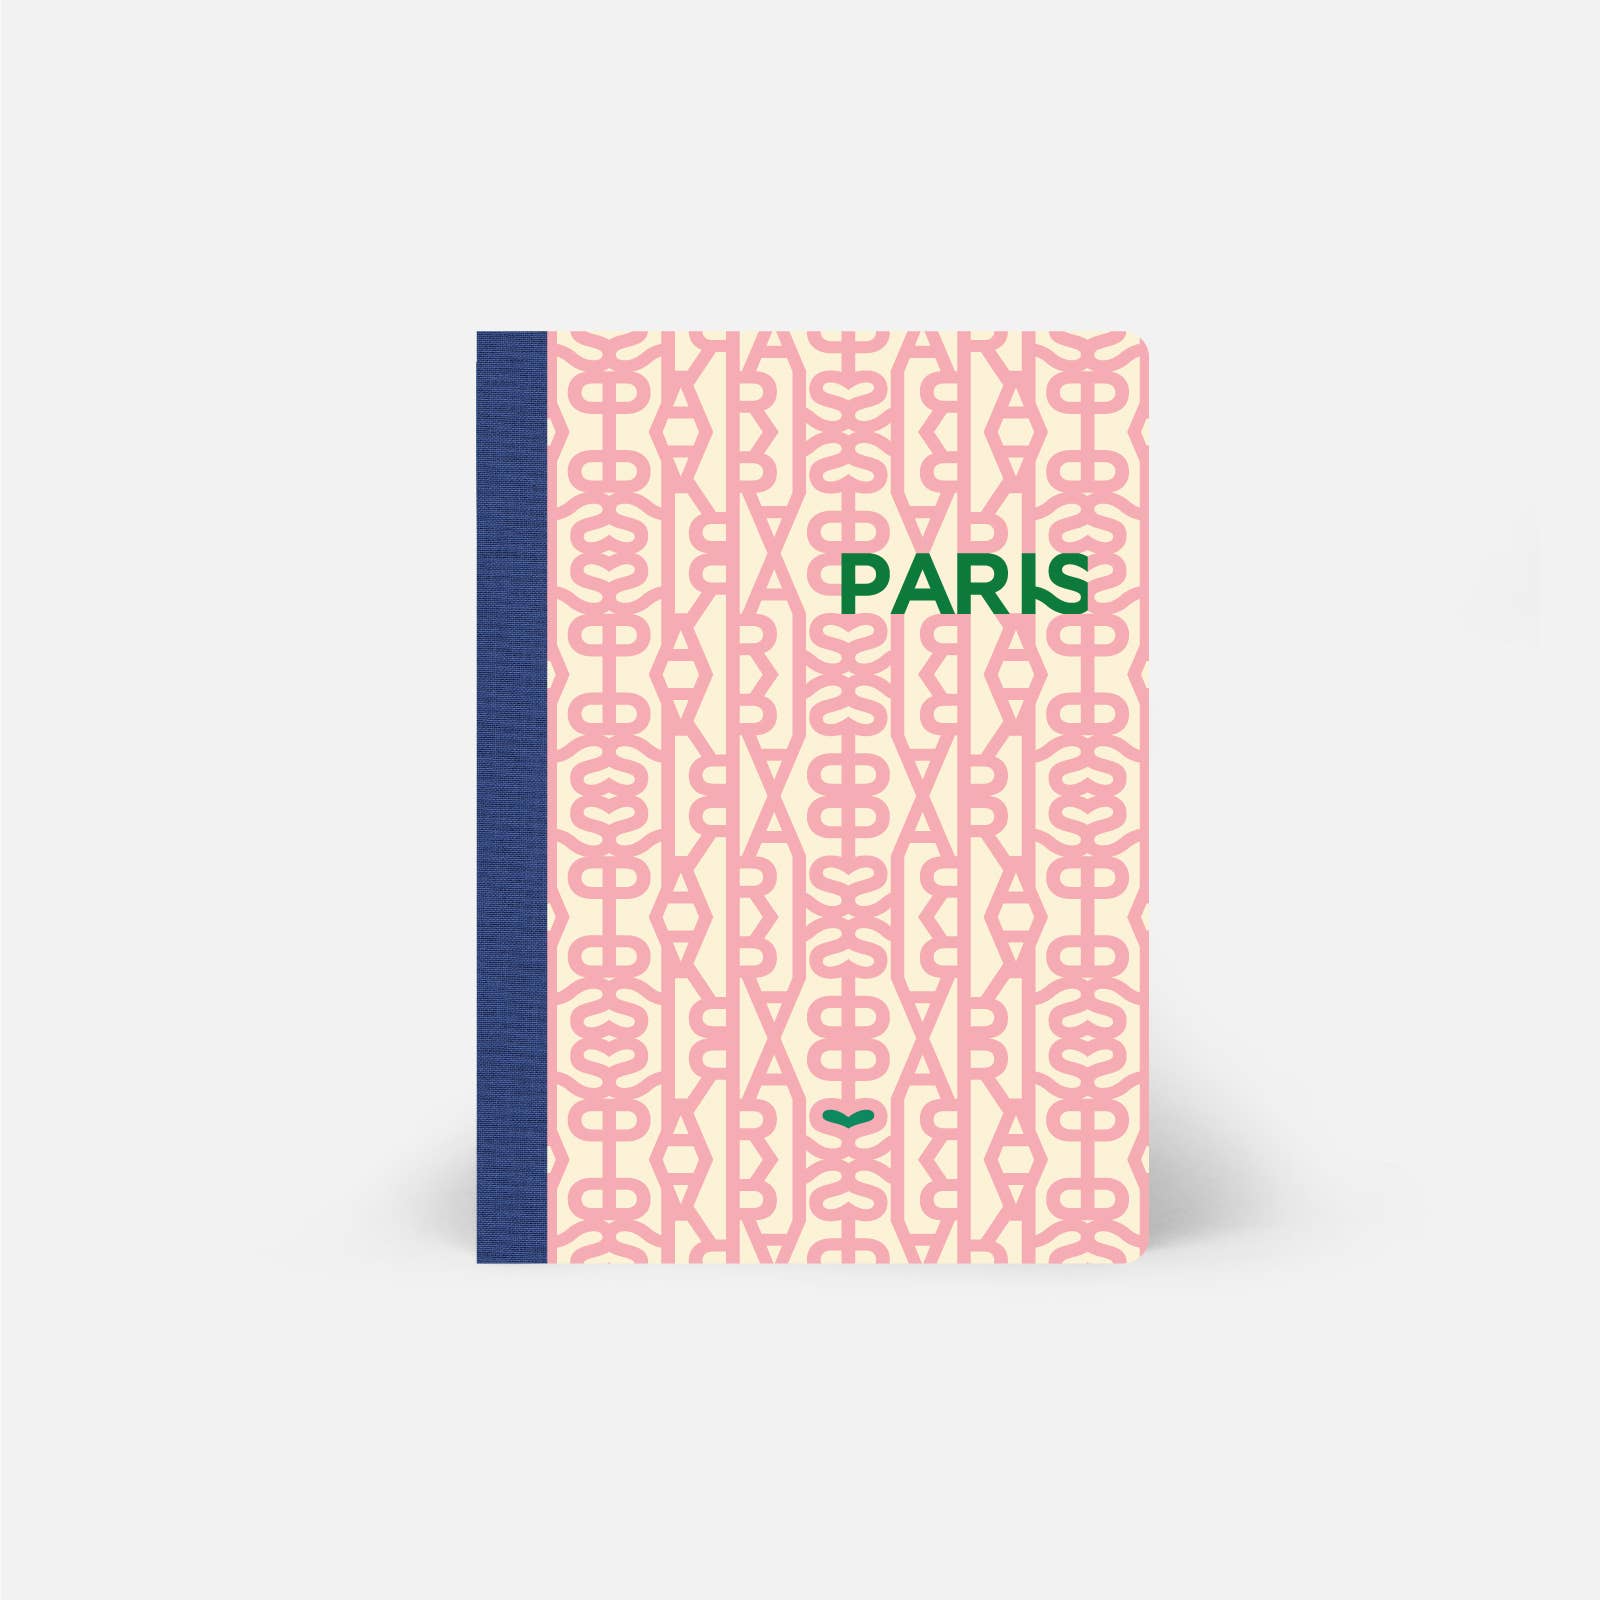 Paris Paris A5 Notebook in Pink